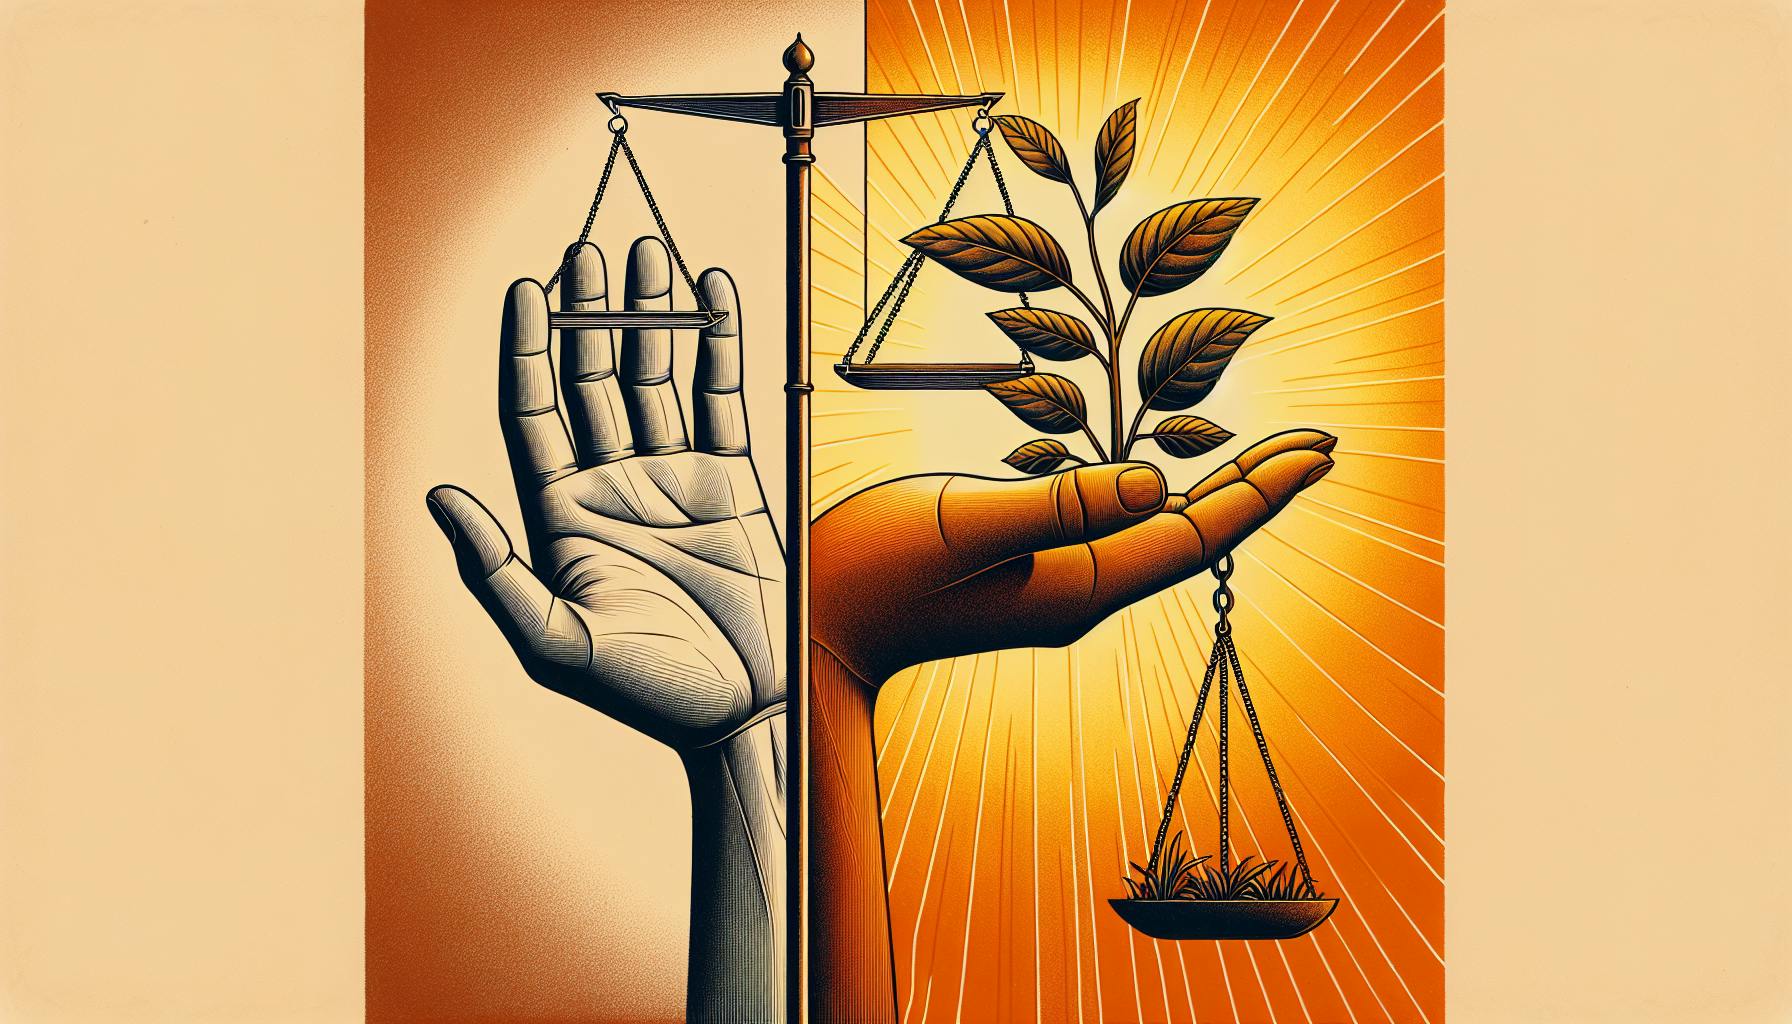 Deterrence vs Rehabilitation: Goals of the Criminal Justice System